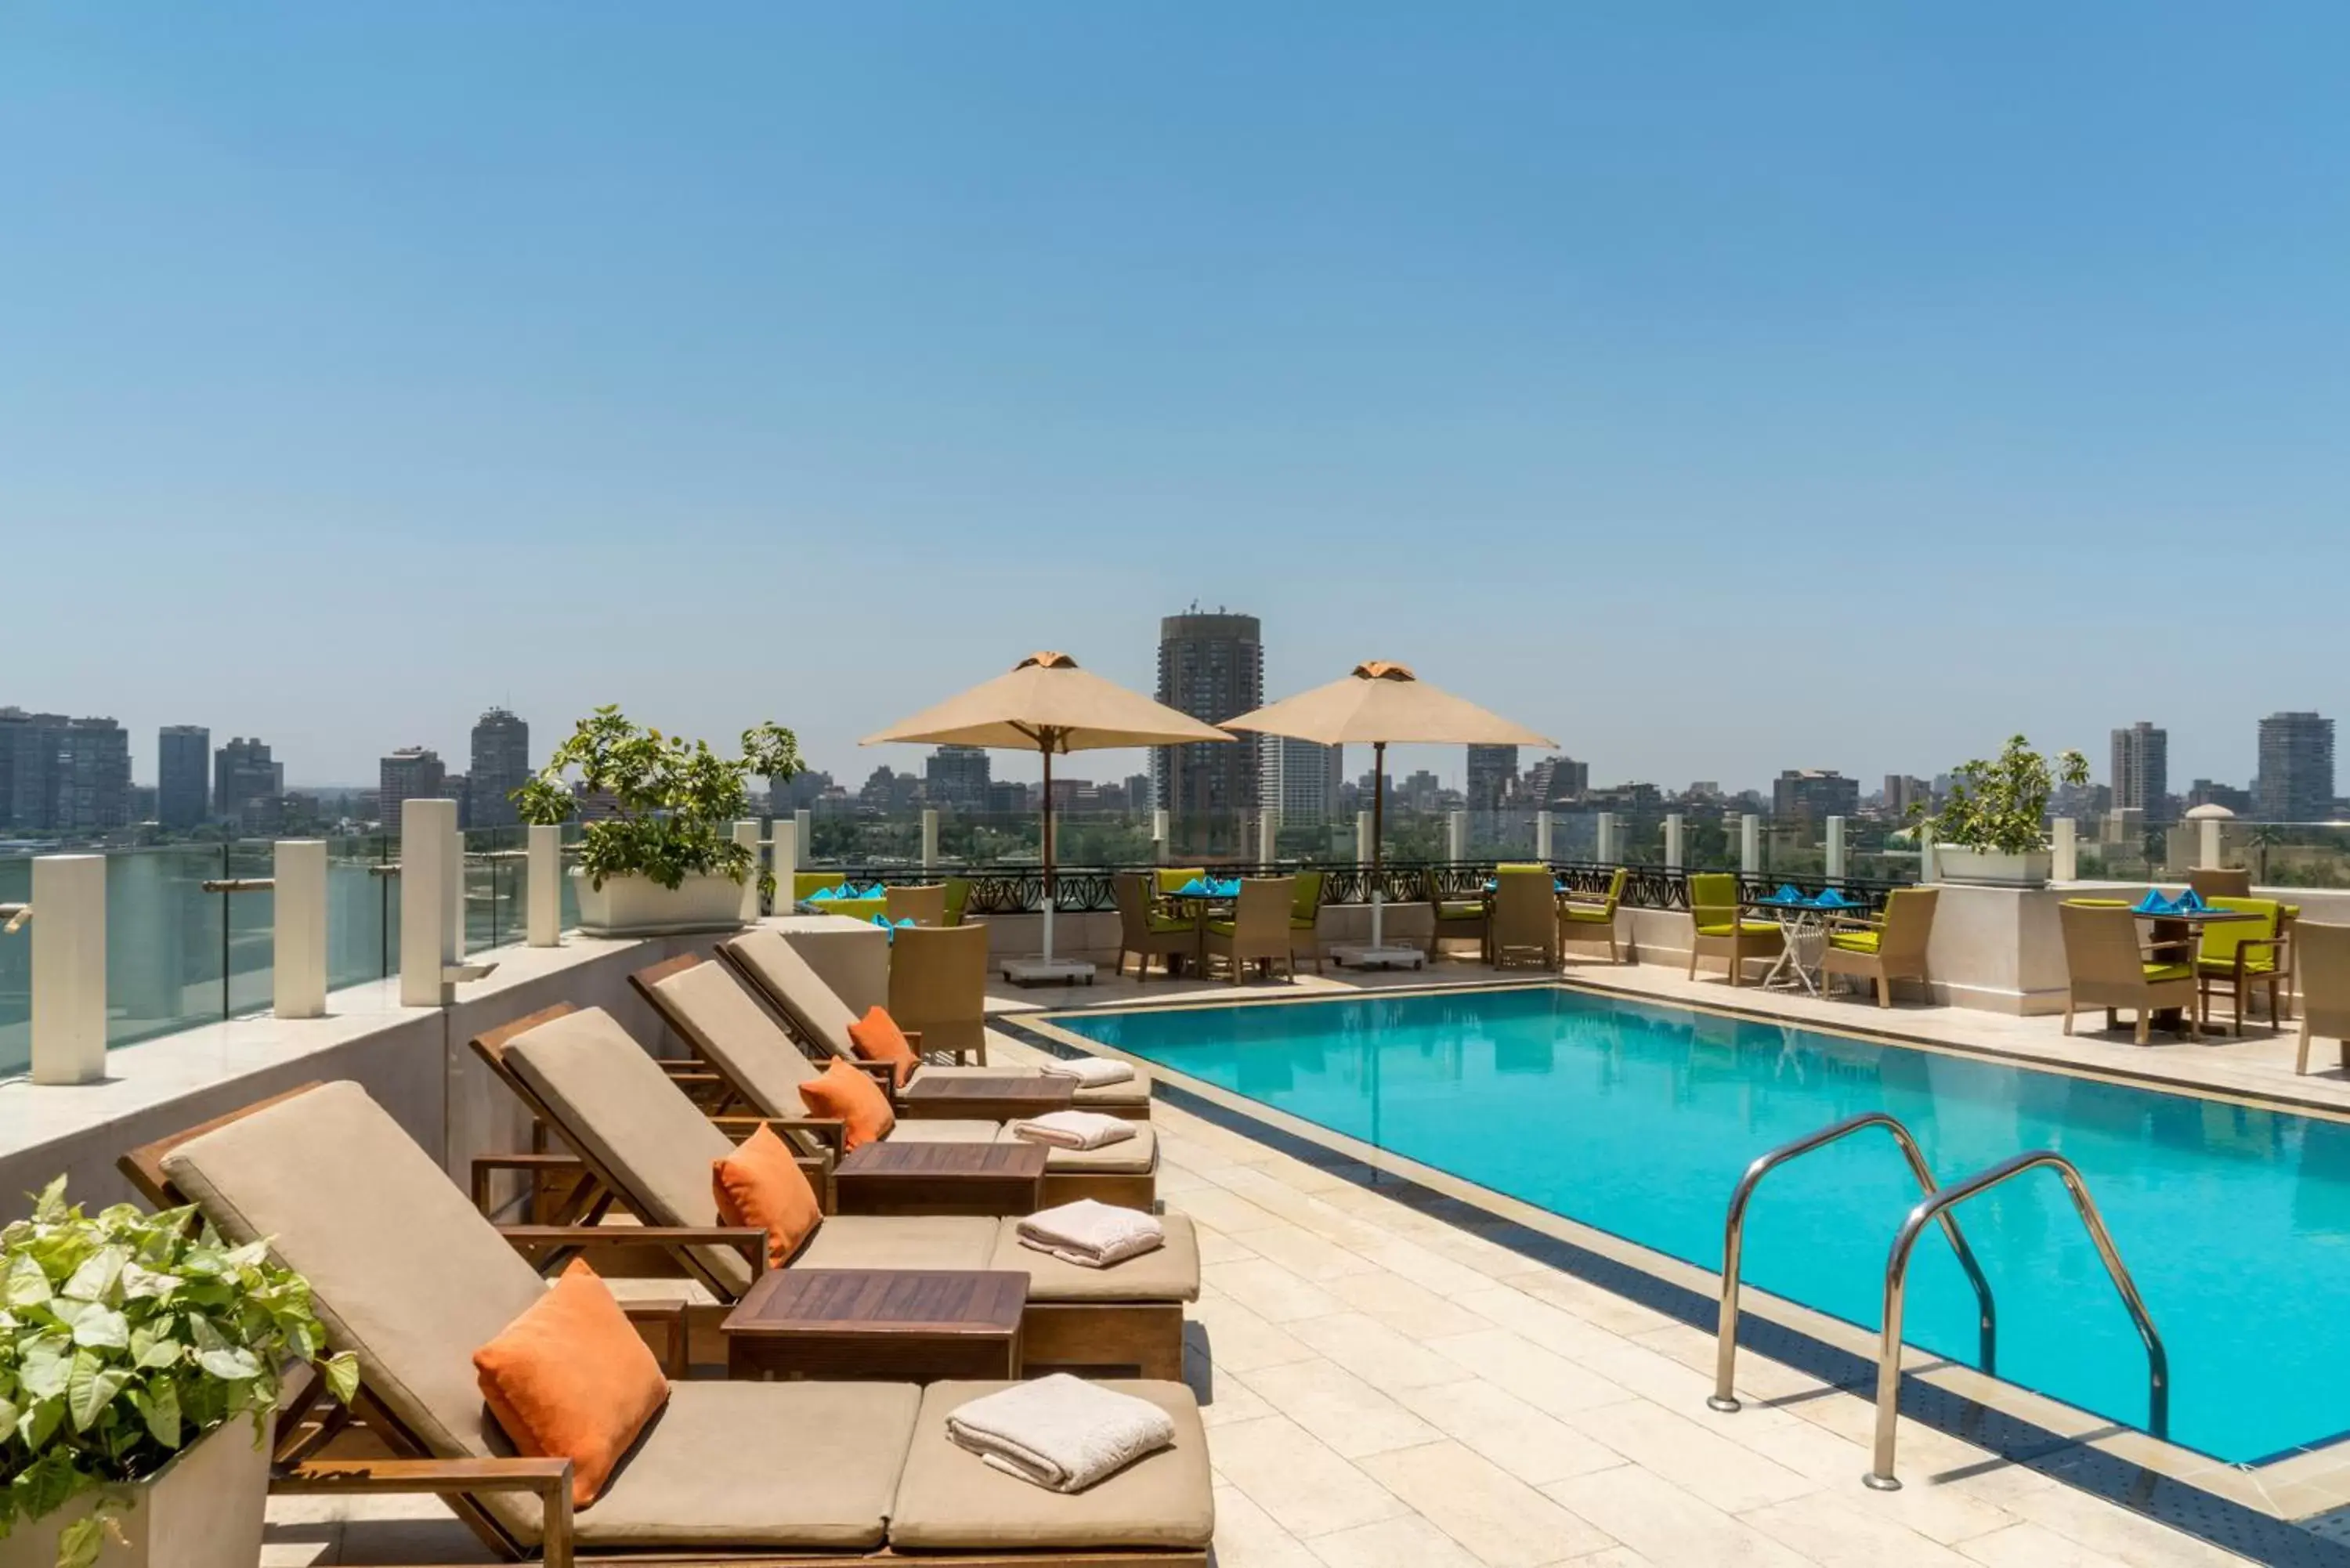 Swimming Pool in Kempinski Nile Hotel, Cairo